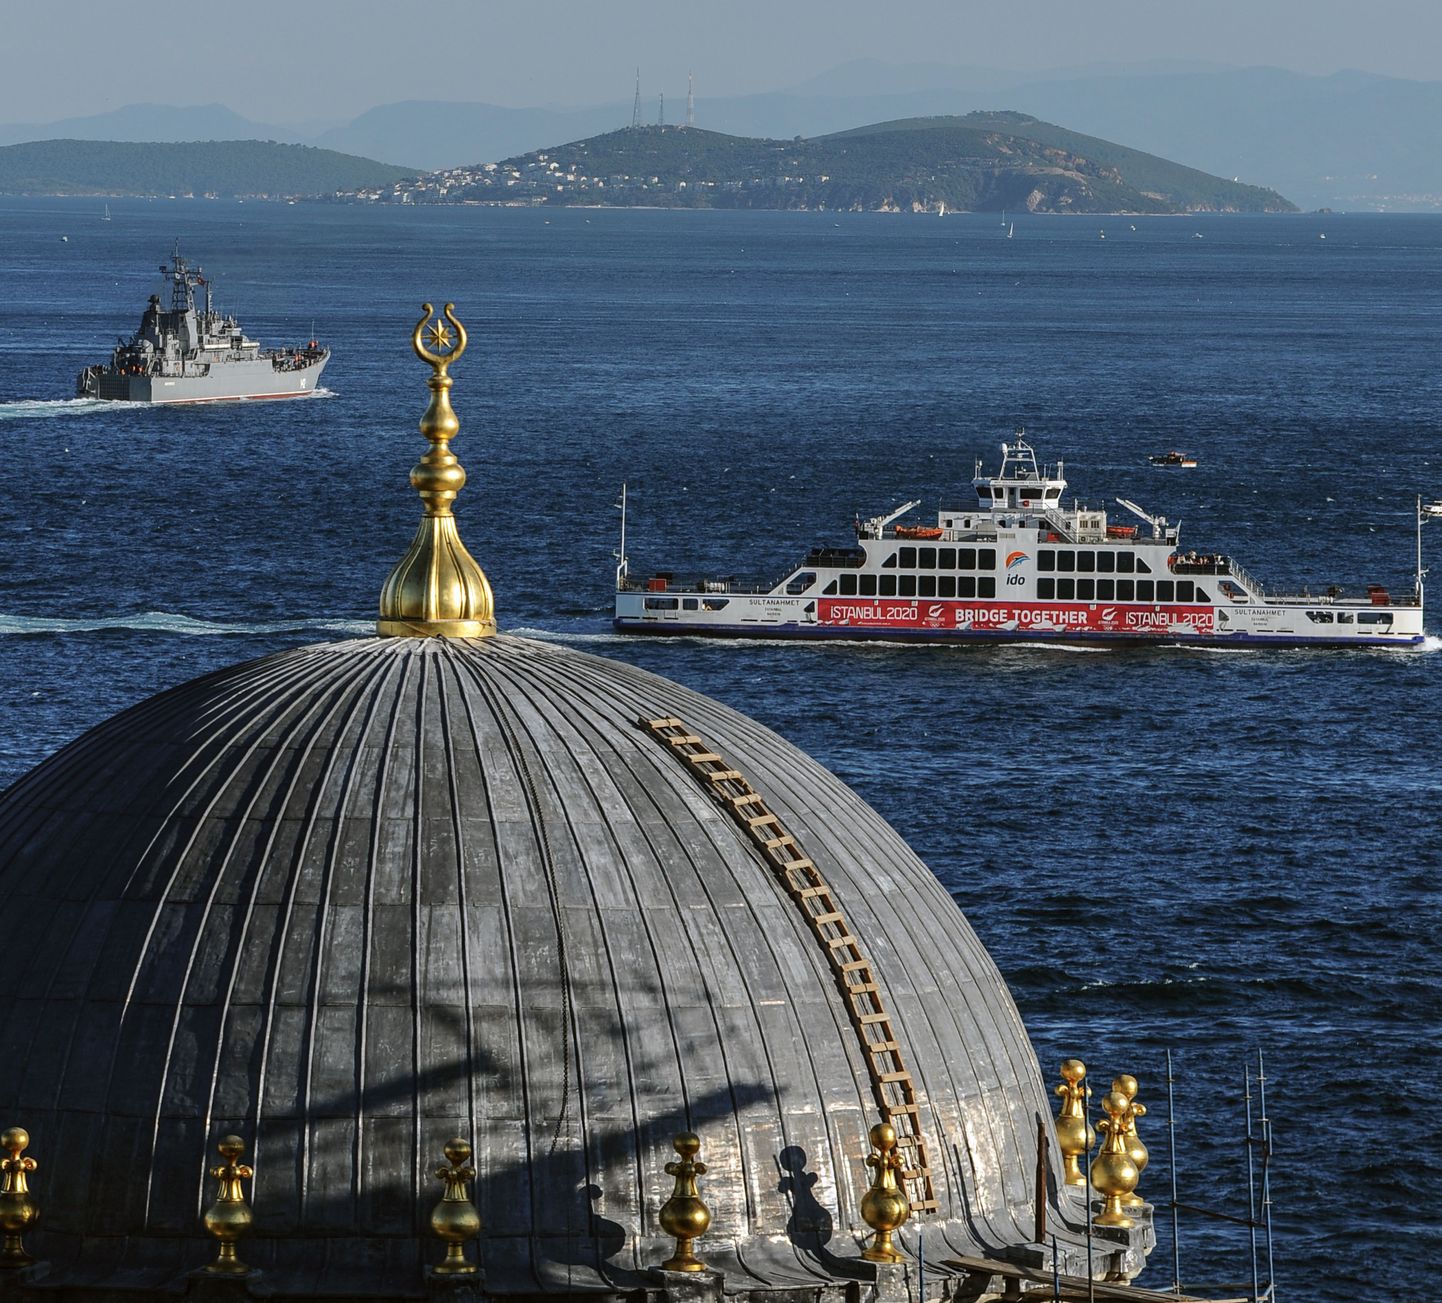 Vene sõjalaev (vasakul) Bosporuse väinal.